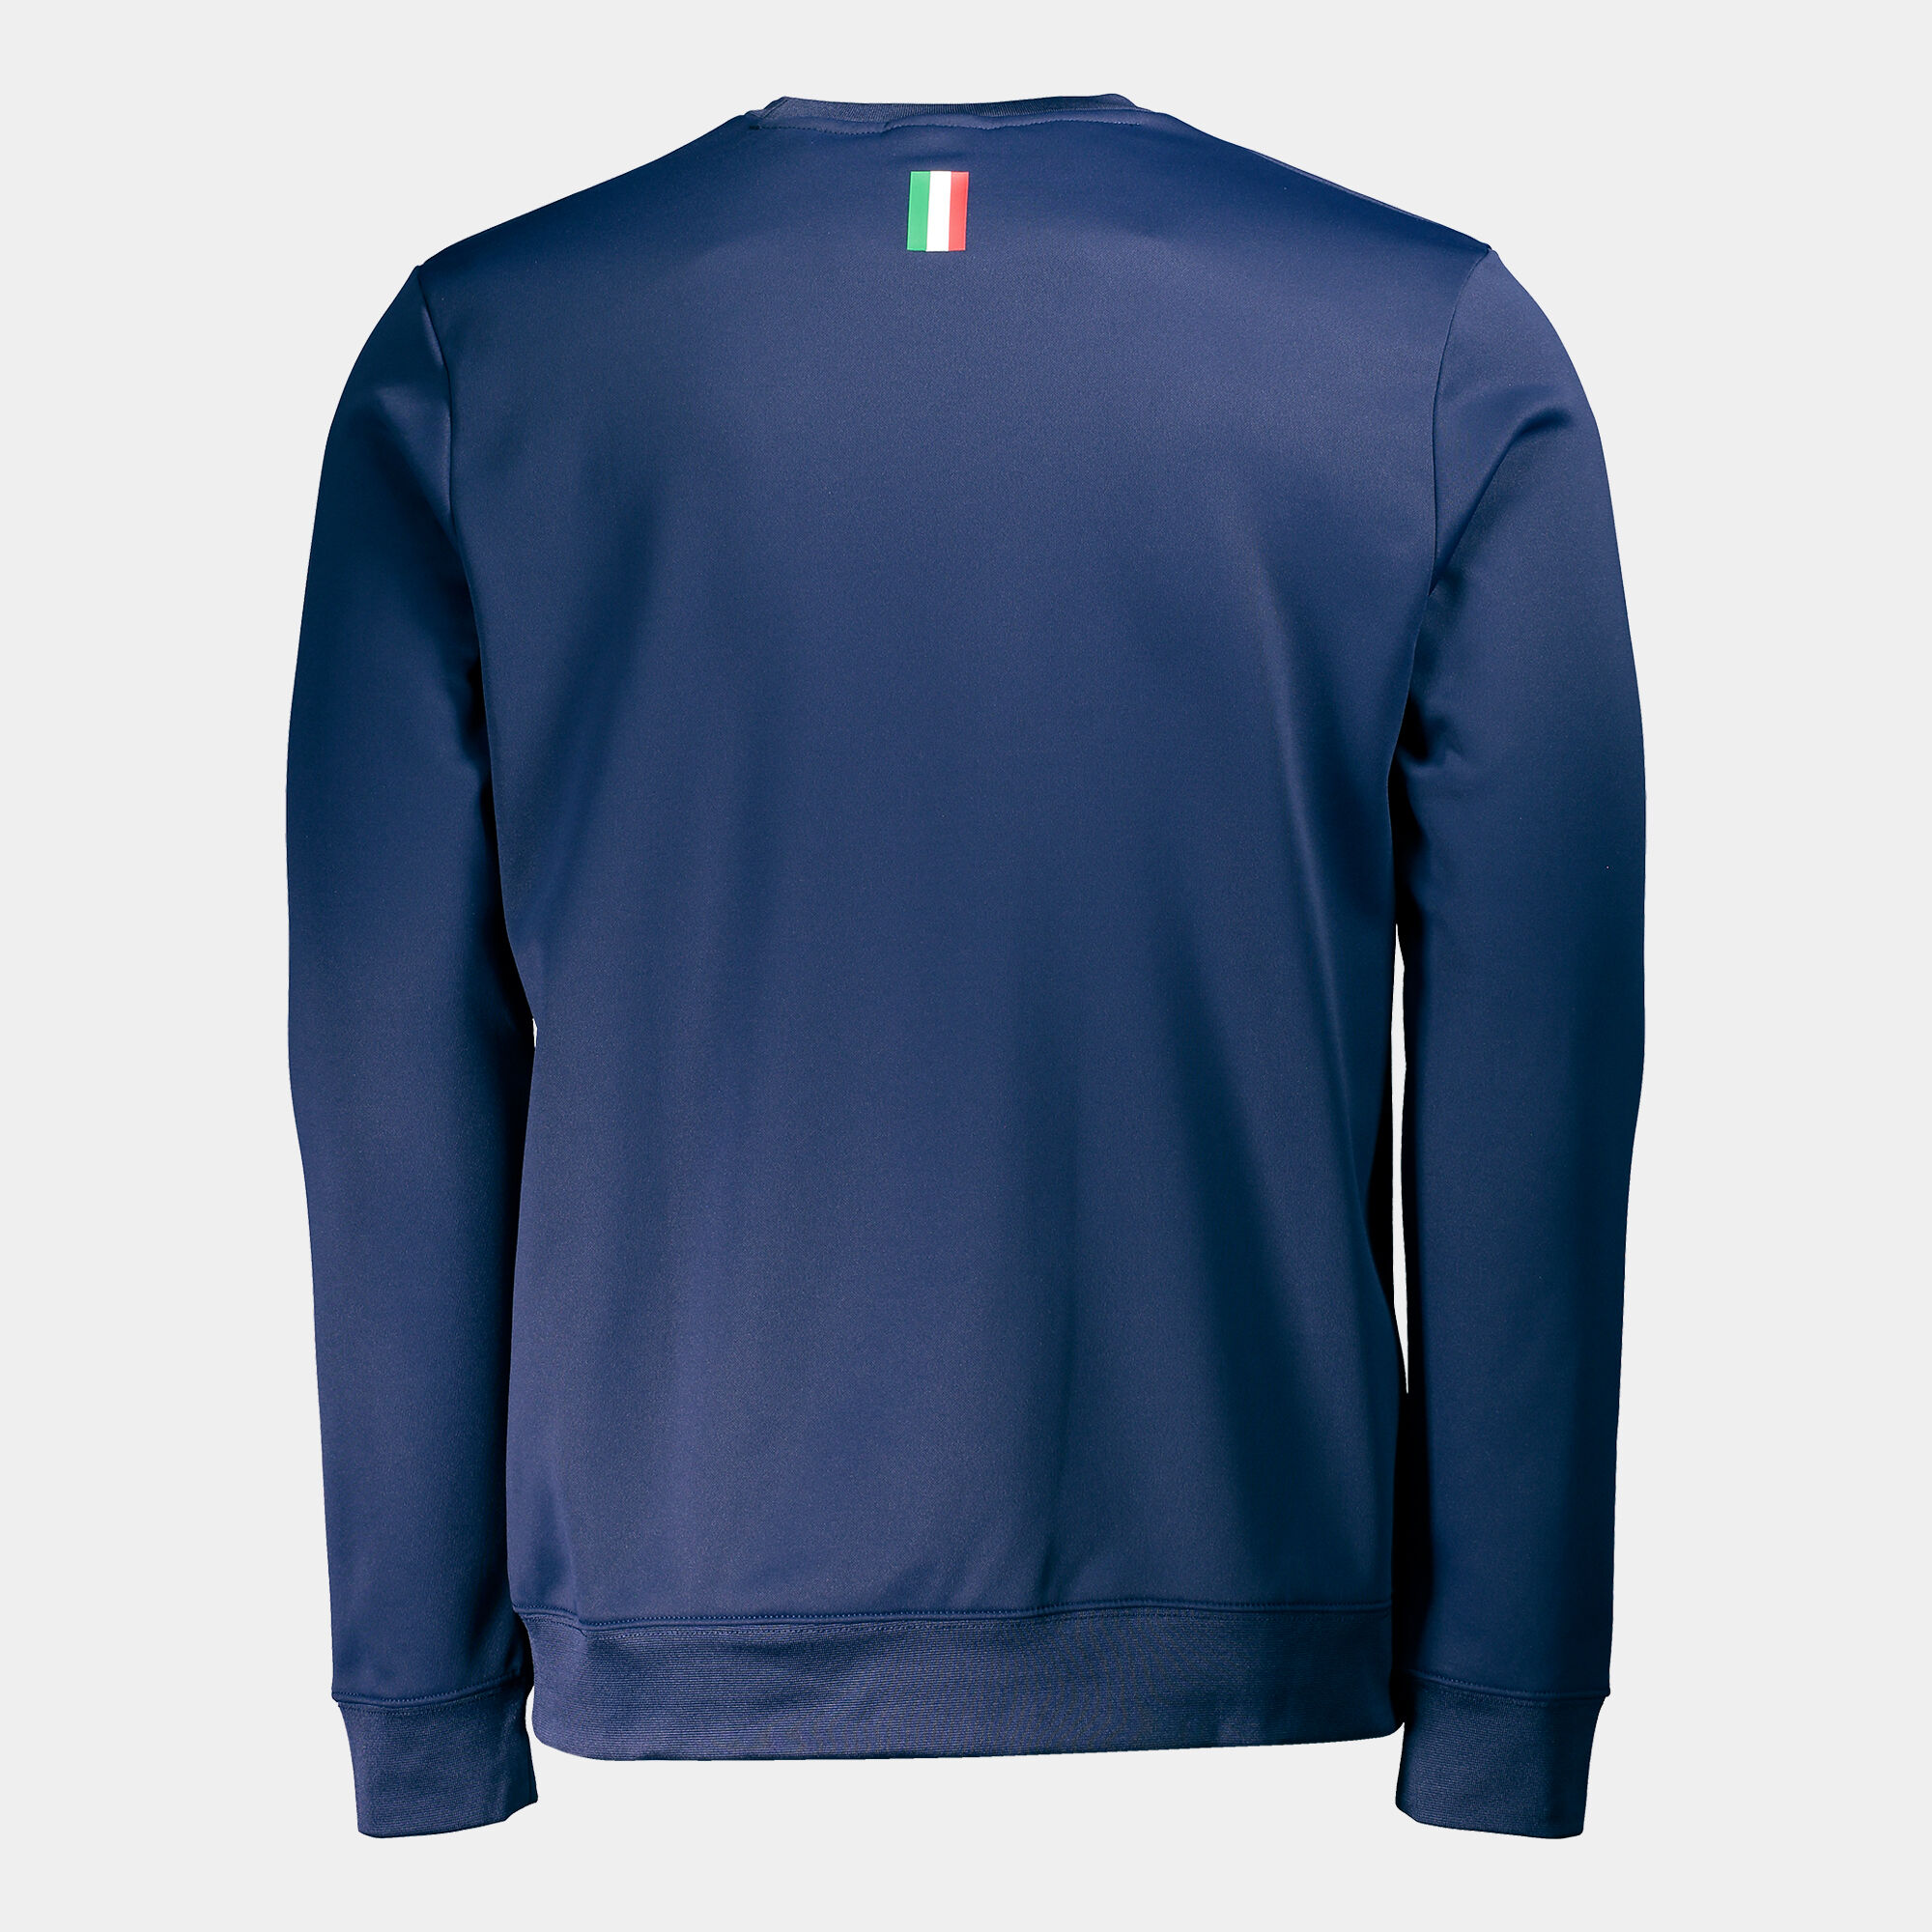 Sweatshirt Italian Tennis And Padel Federation